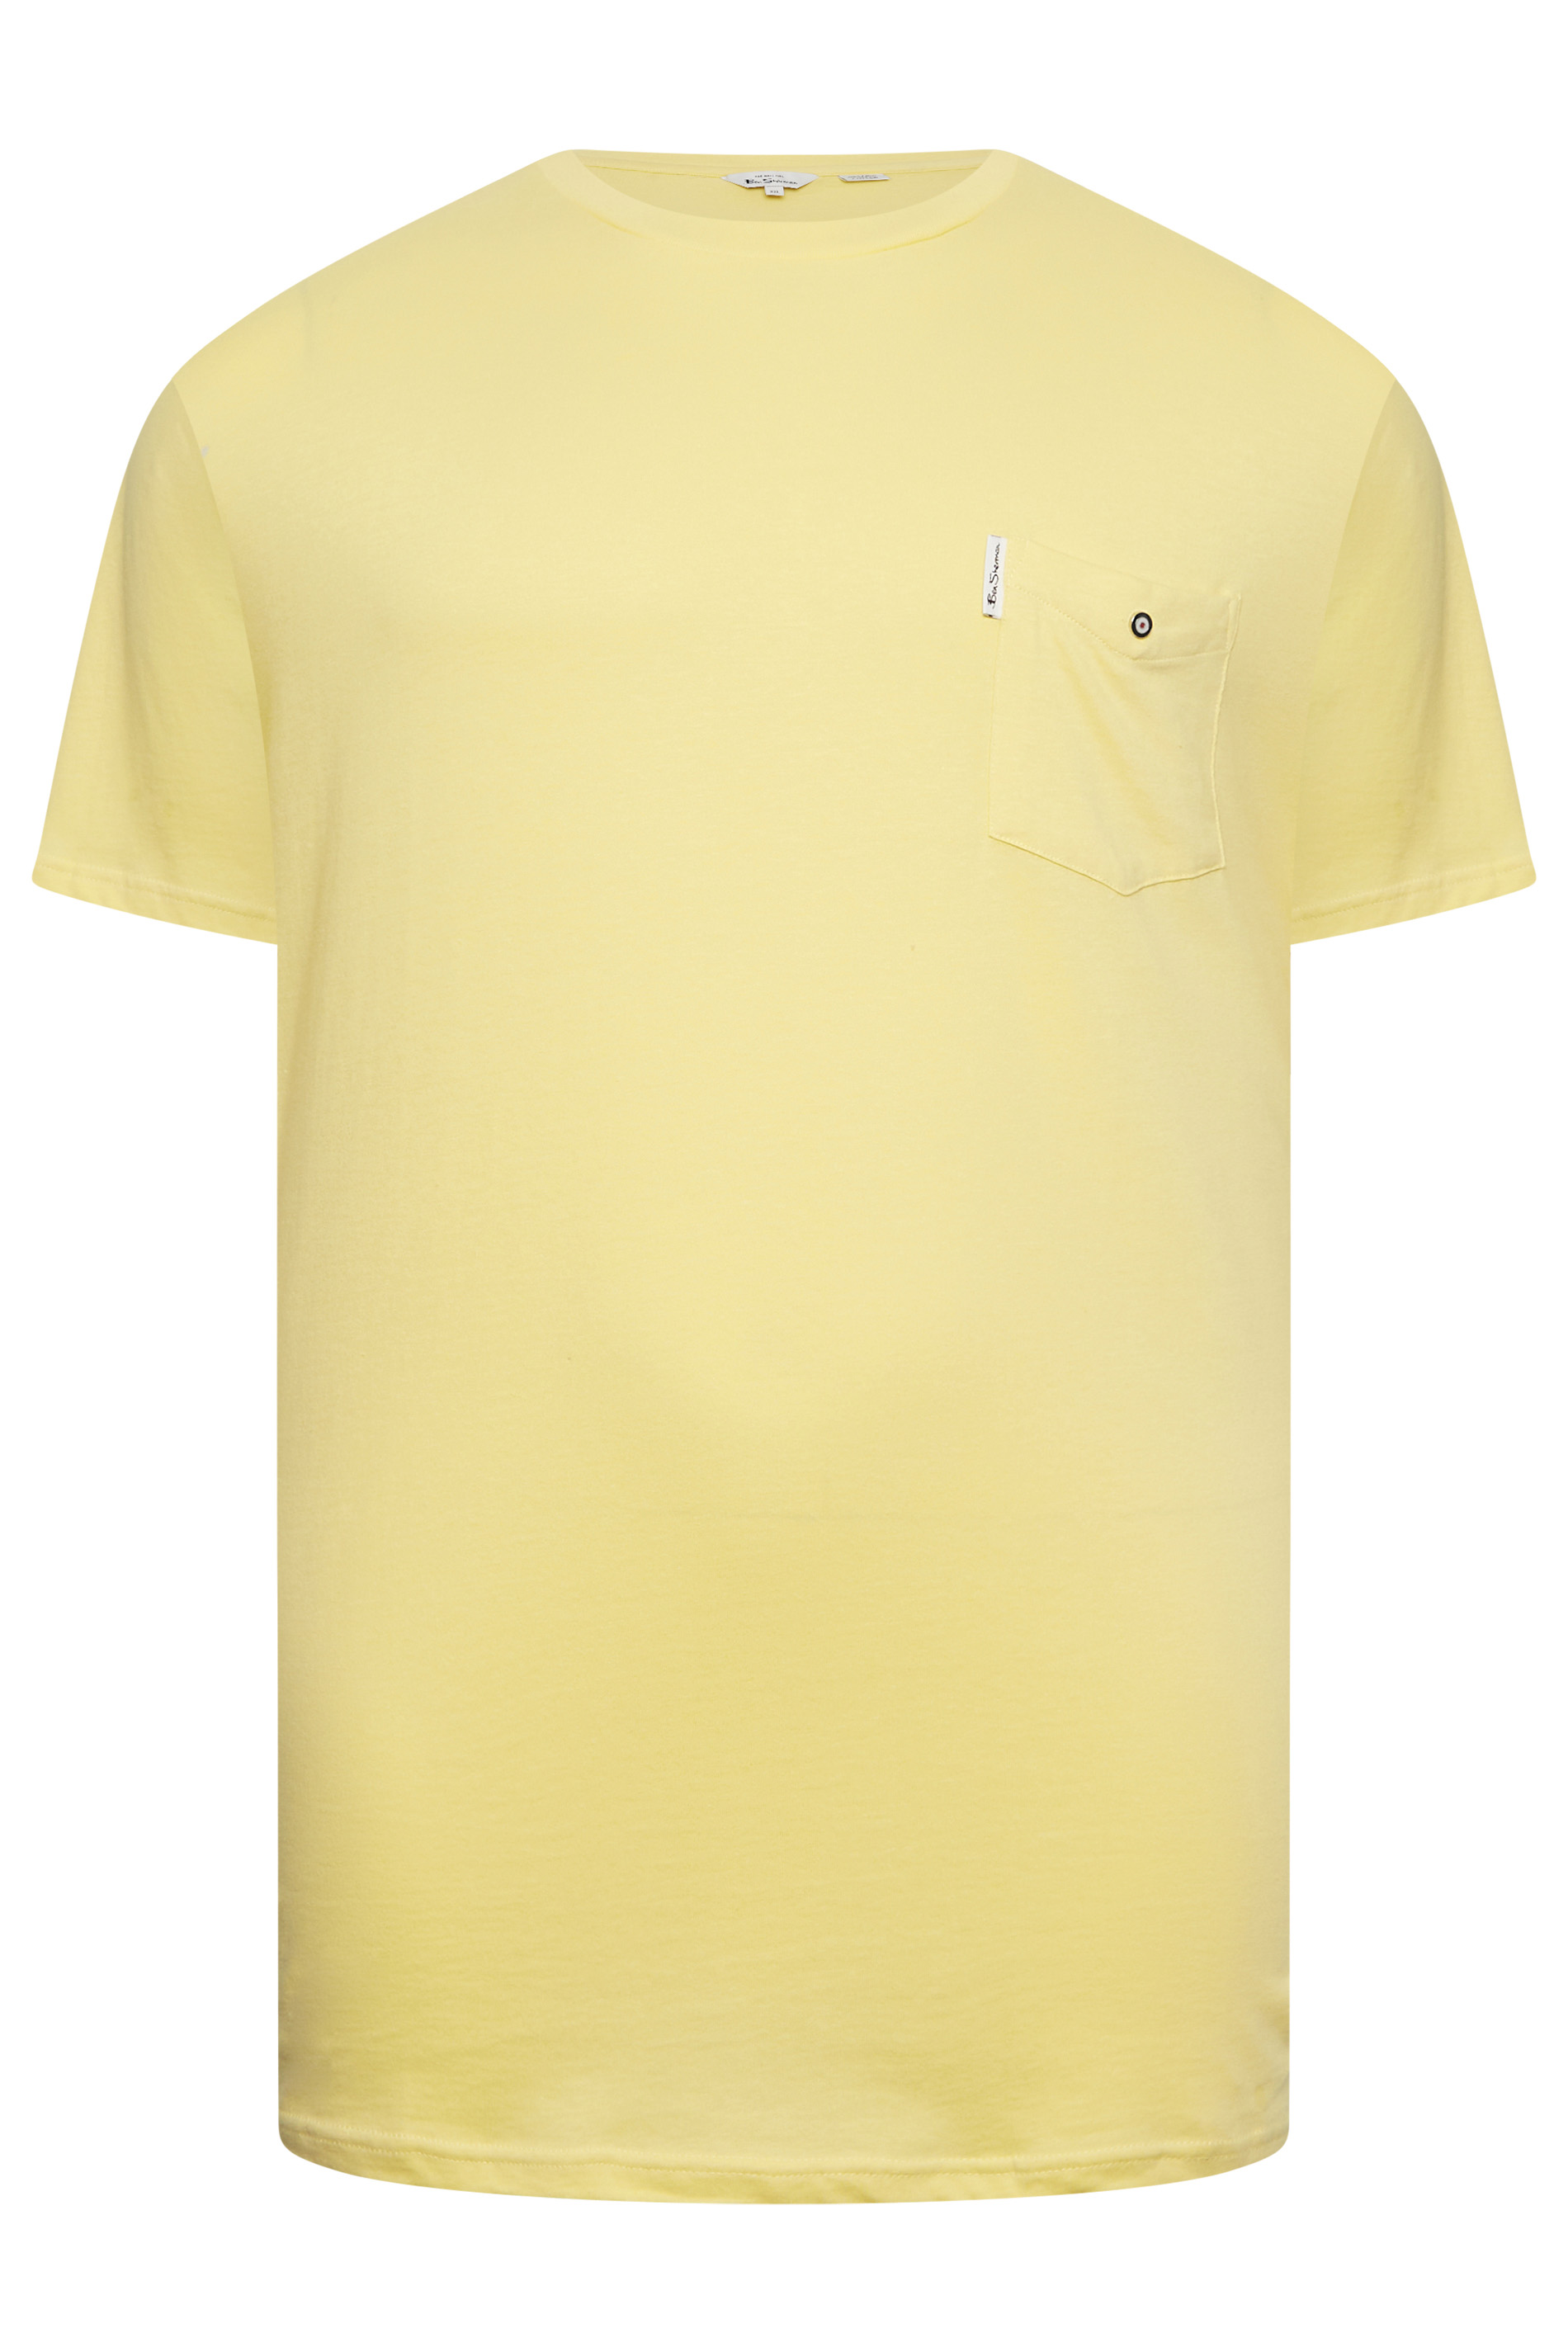 BEN SHERMAN Big & Tall Lemon Yellow Signature Pocket T-Shirt | BadRhino 3